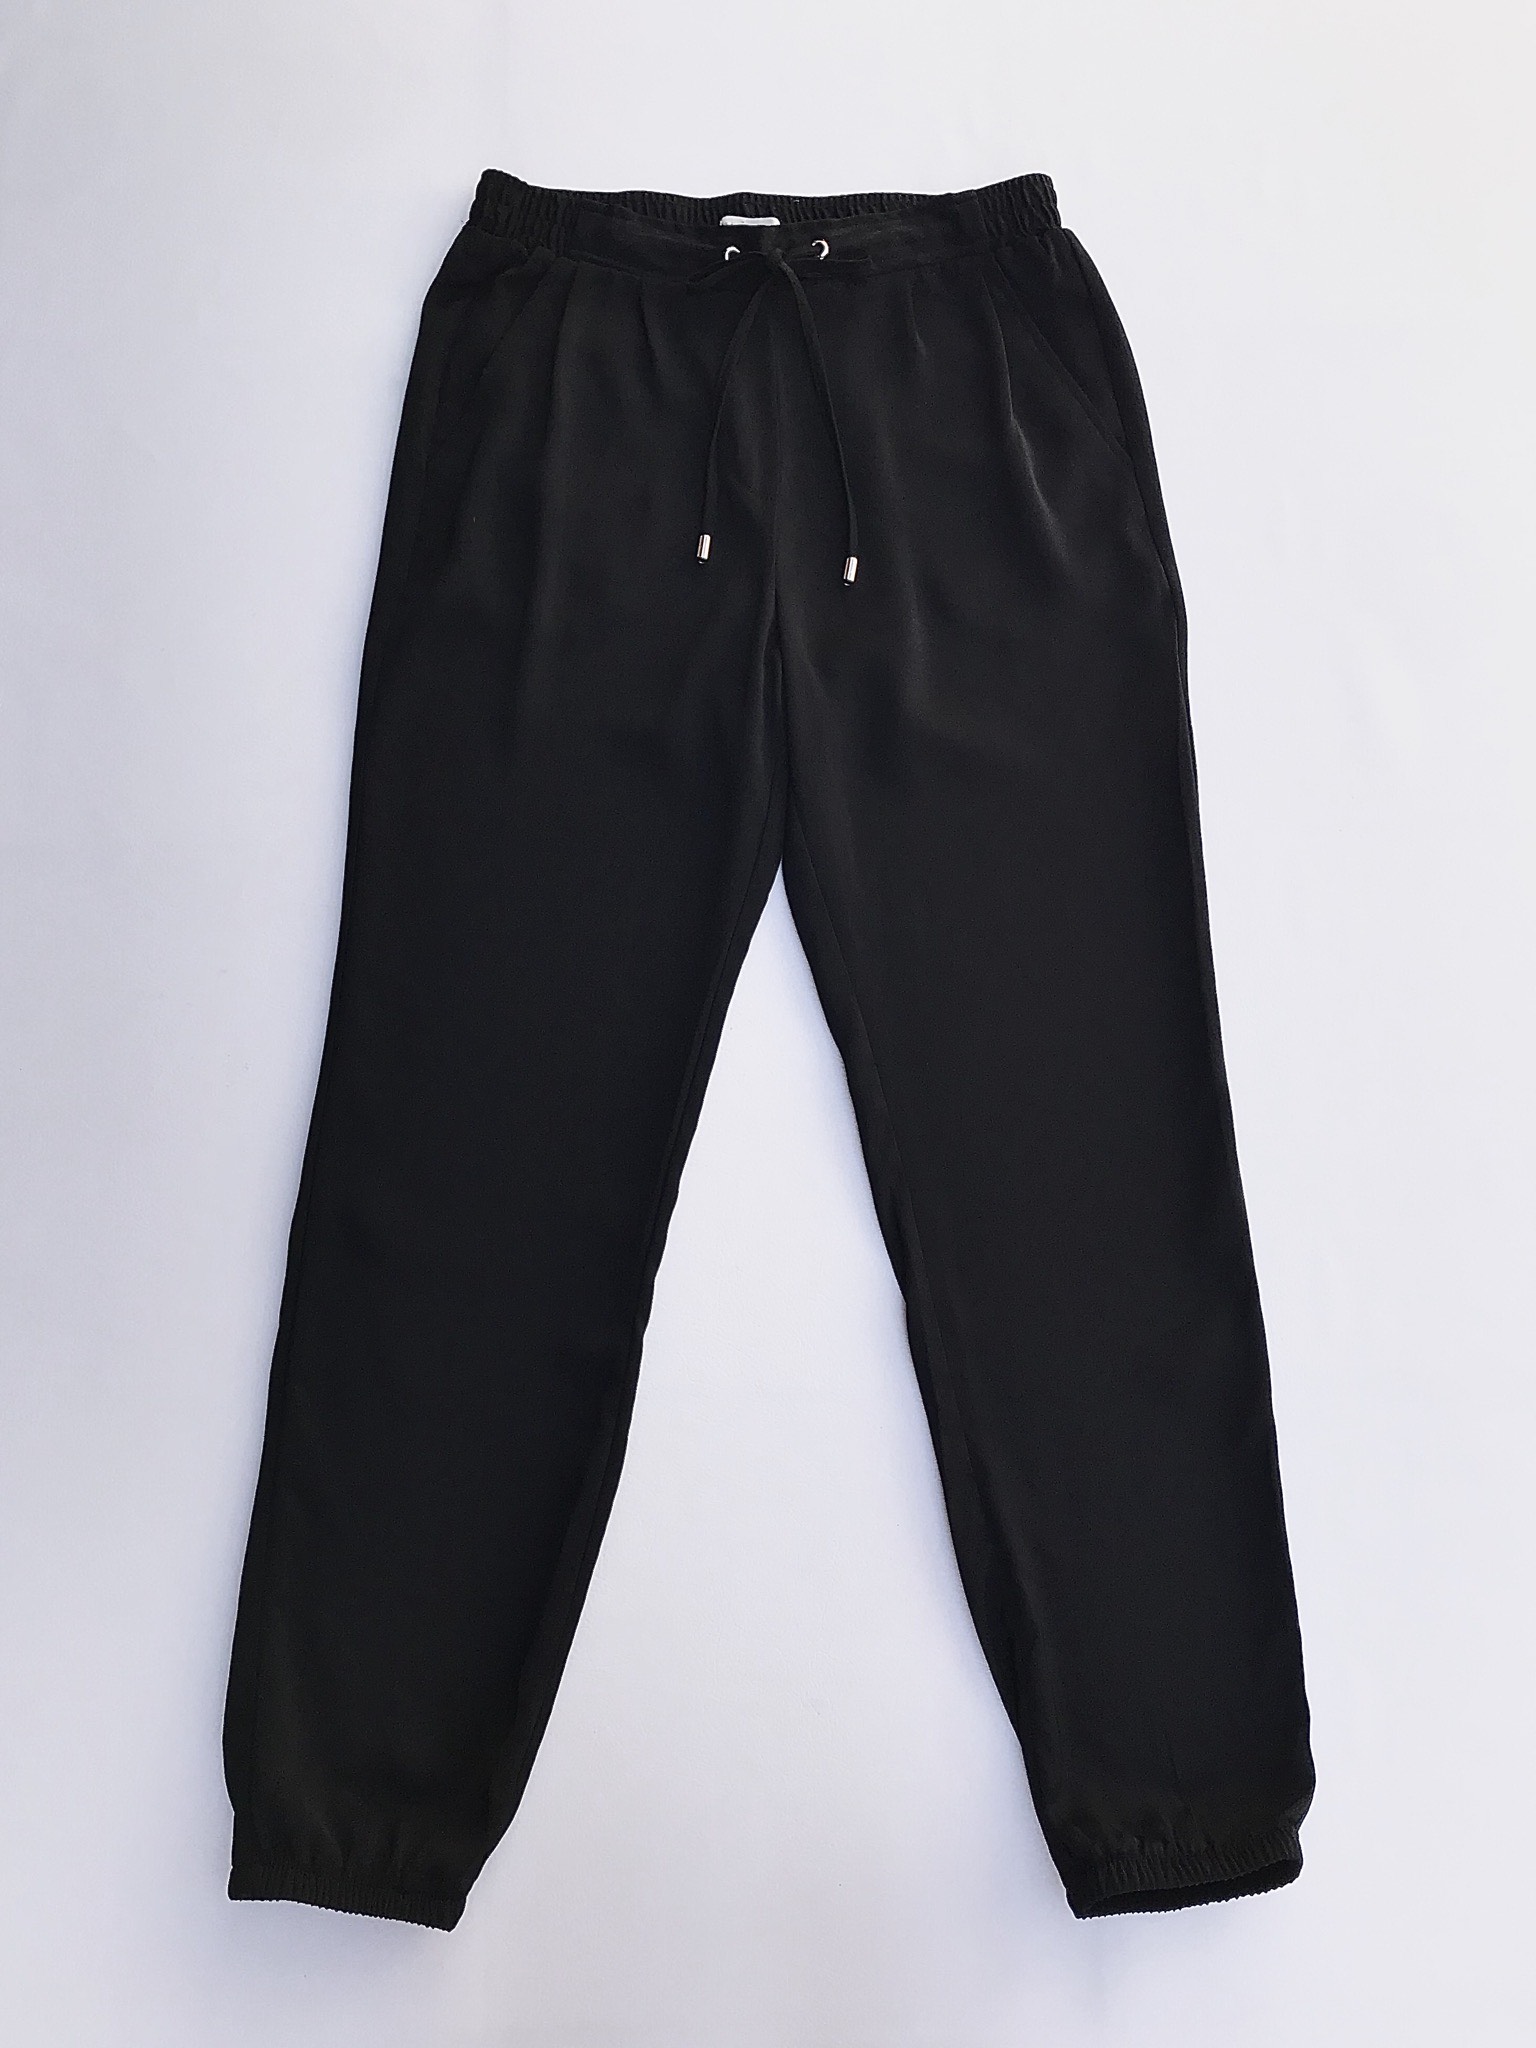 Pantalón Sfera negro, estilo jogger de tela plana, 
 con pinzas delanteras, bolsillos laterales, elástico posterior y en basta, pasador regulable en cintura 
Talla 28